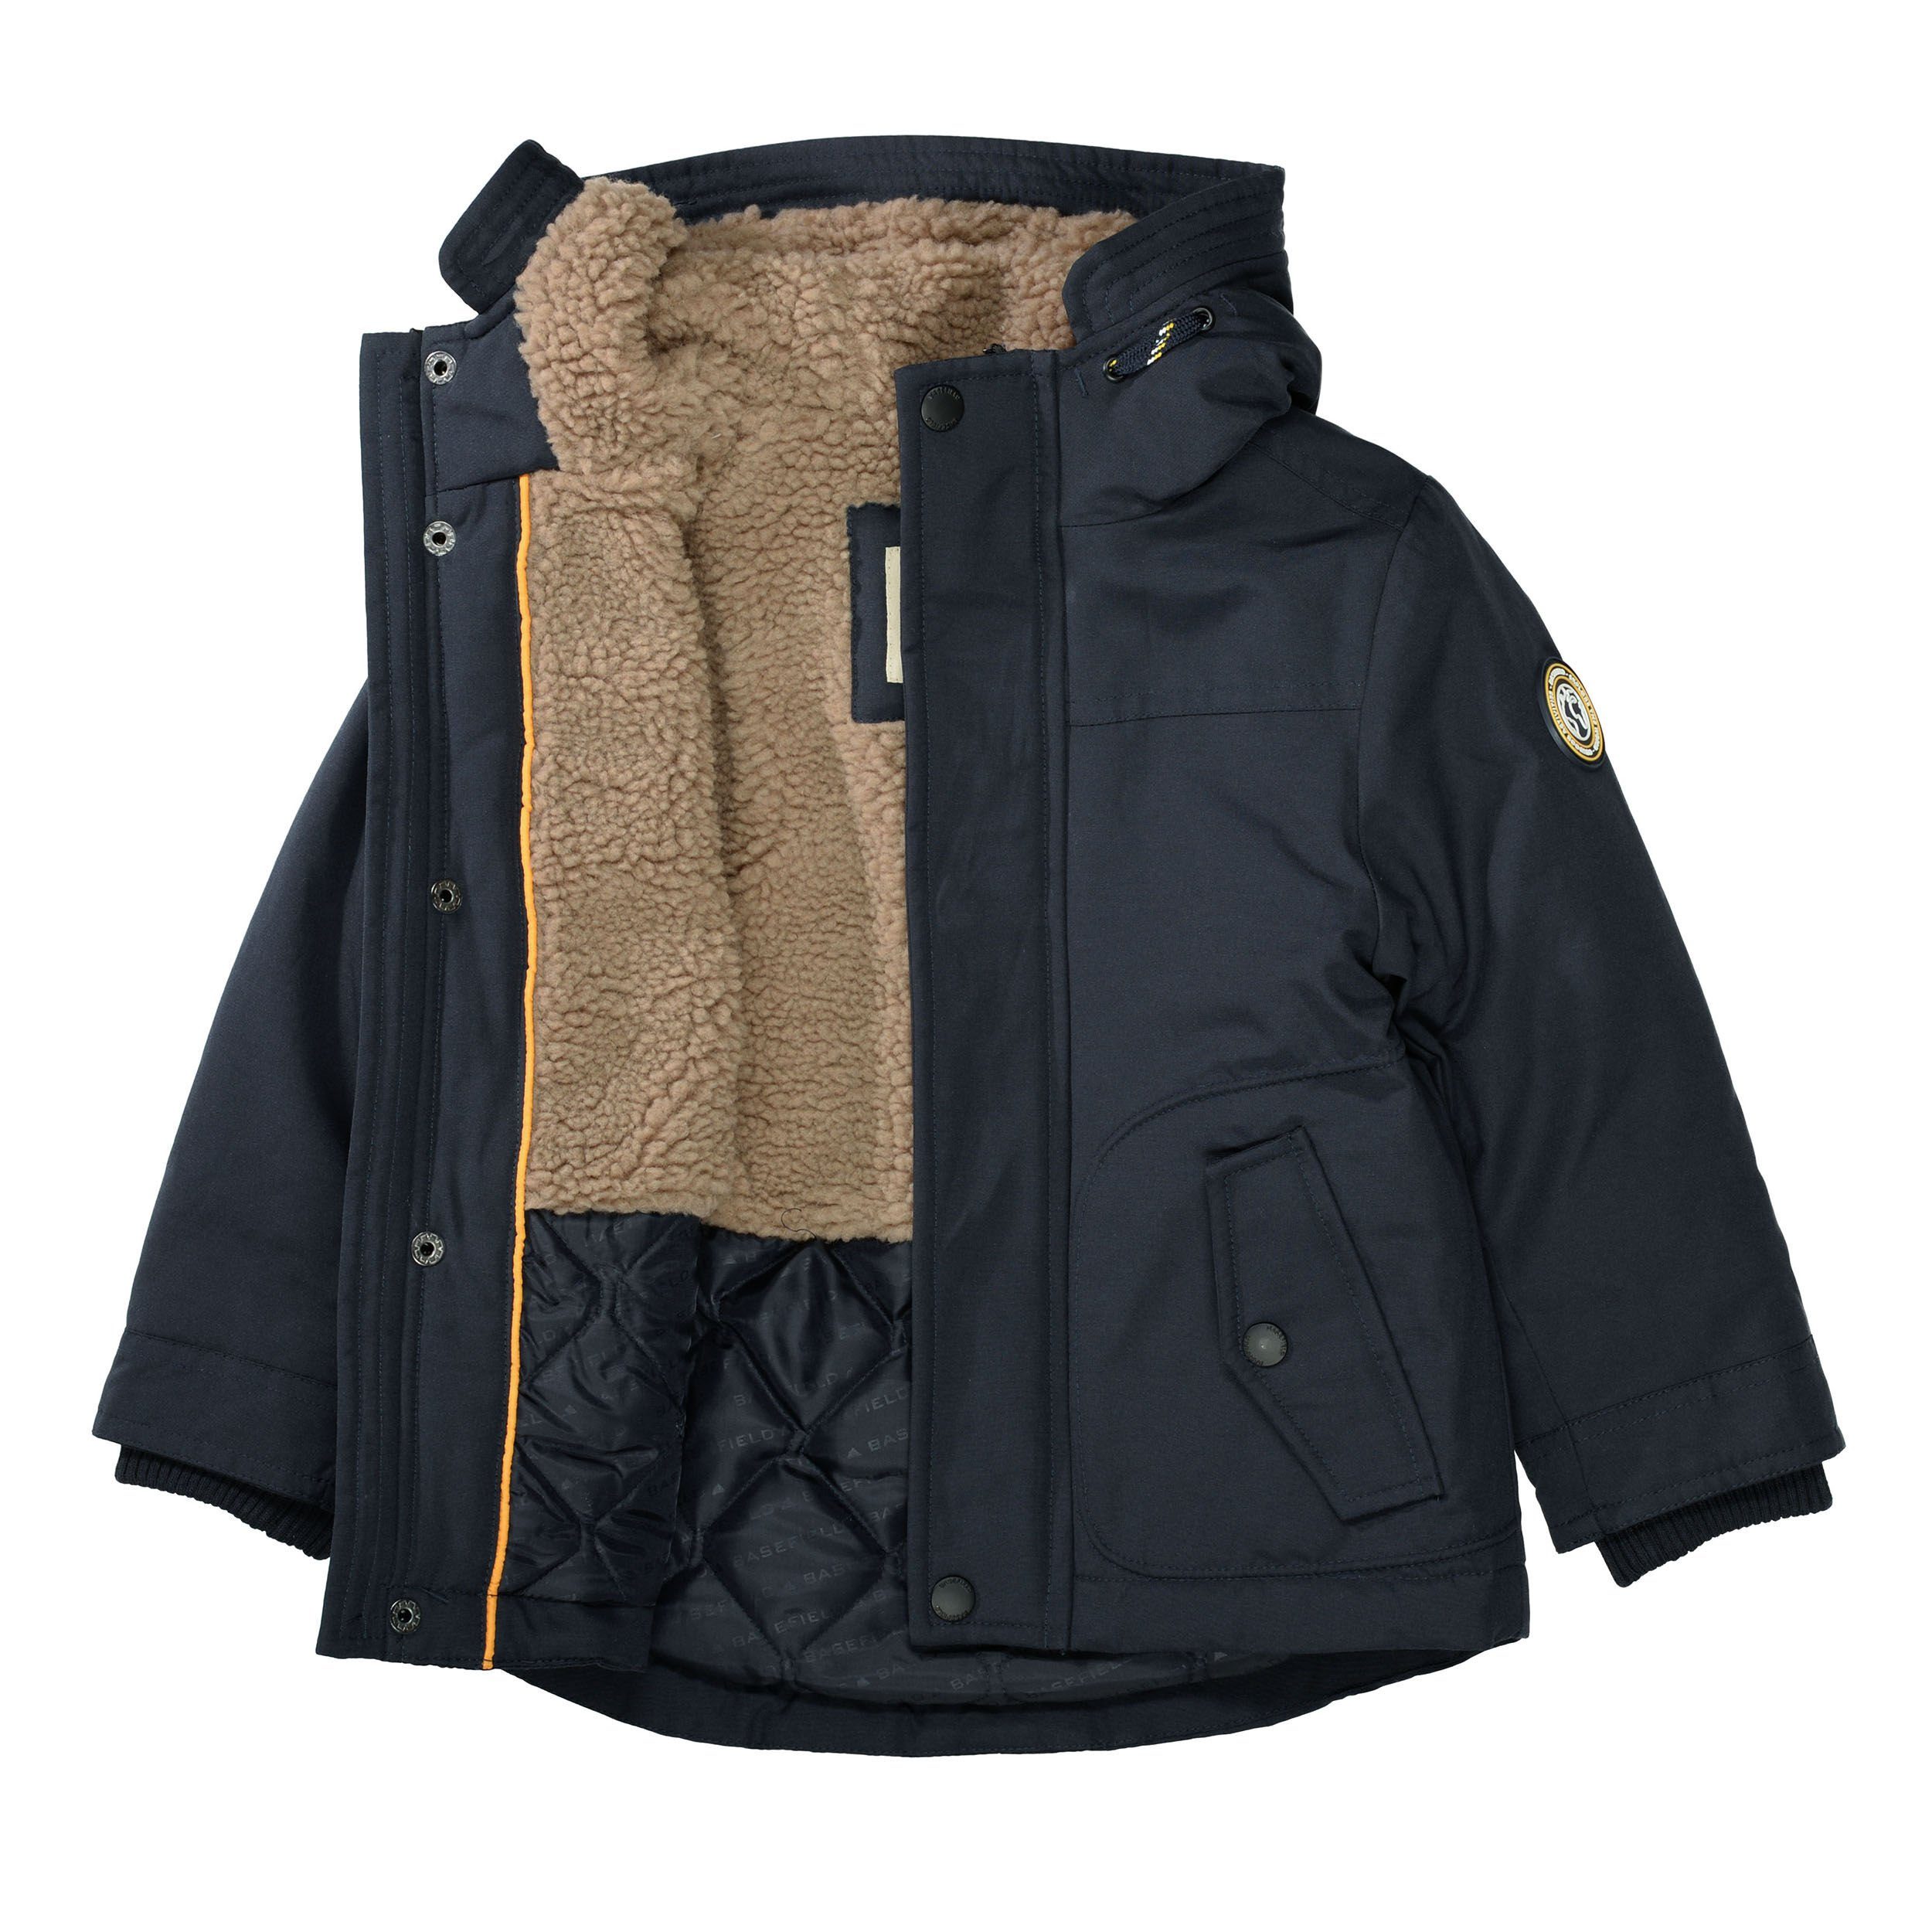 BASEFIELD Winterjacke Jacke mit reflektierenden Details